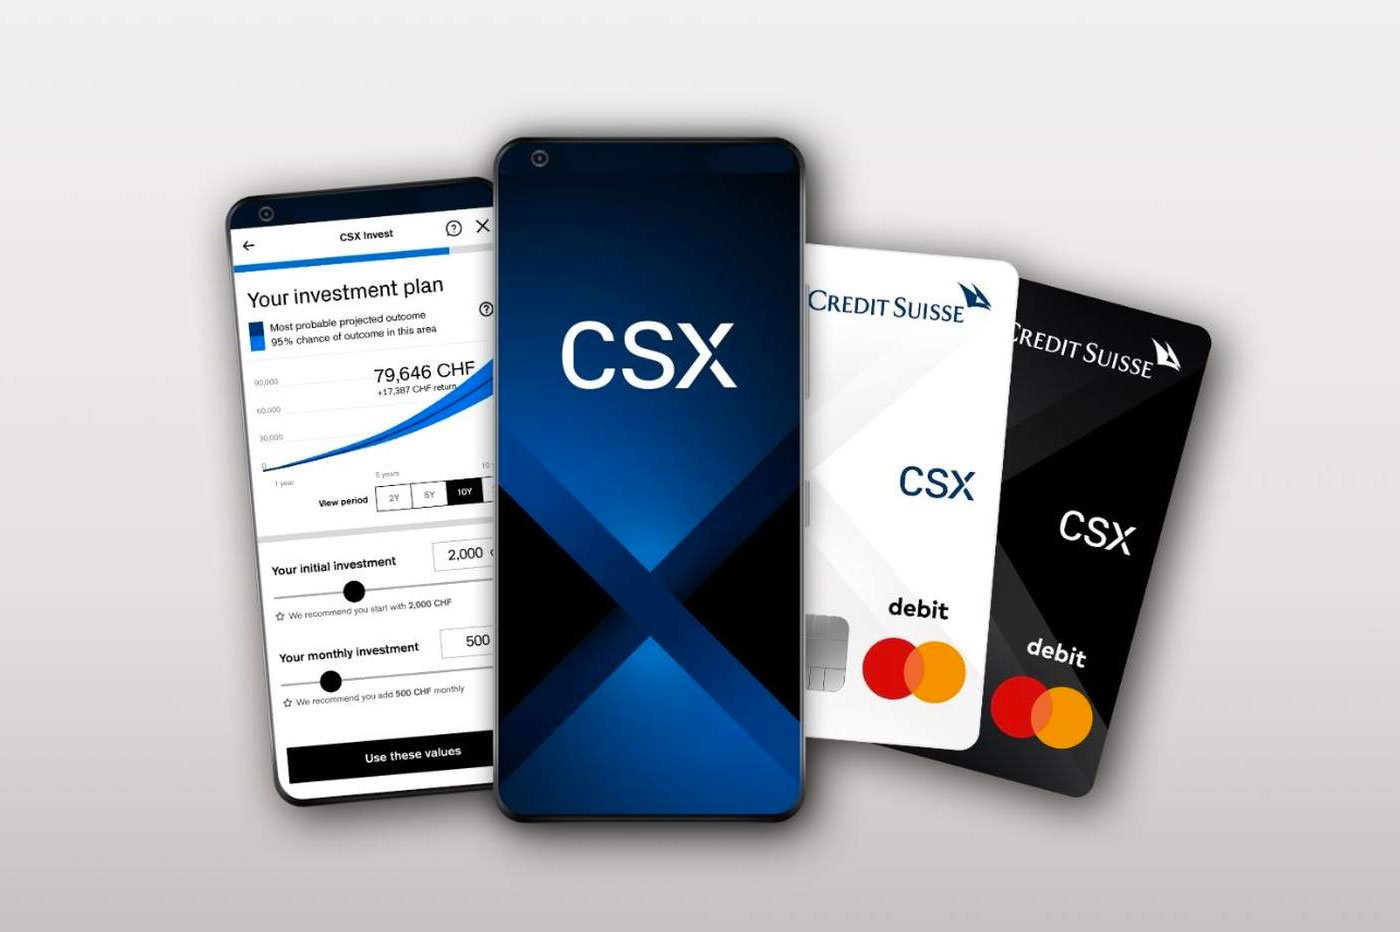 Credit Suisse's CSX: The Alternative to Revolut